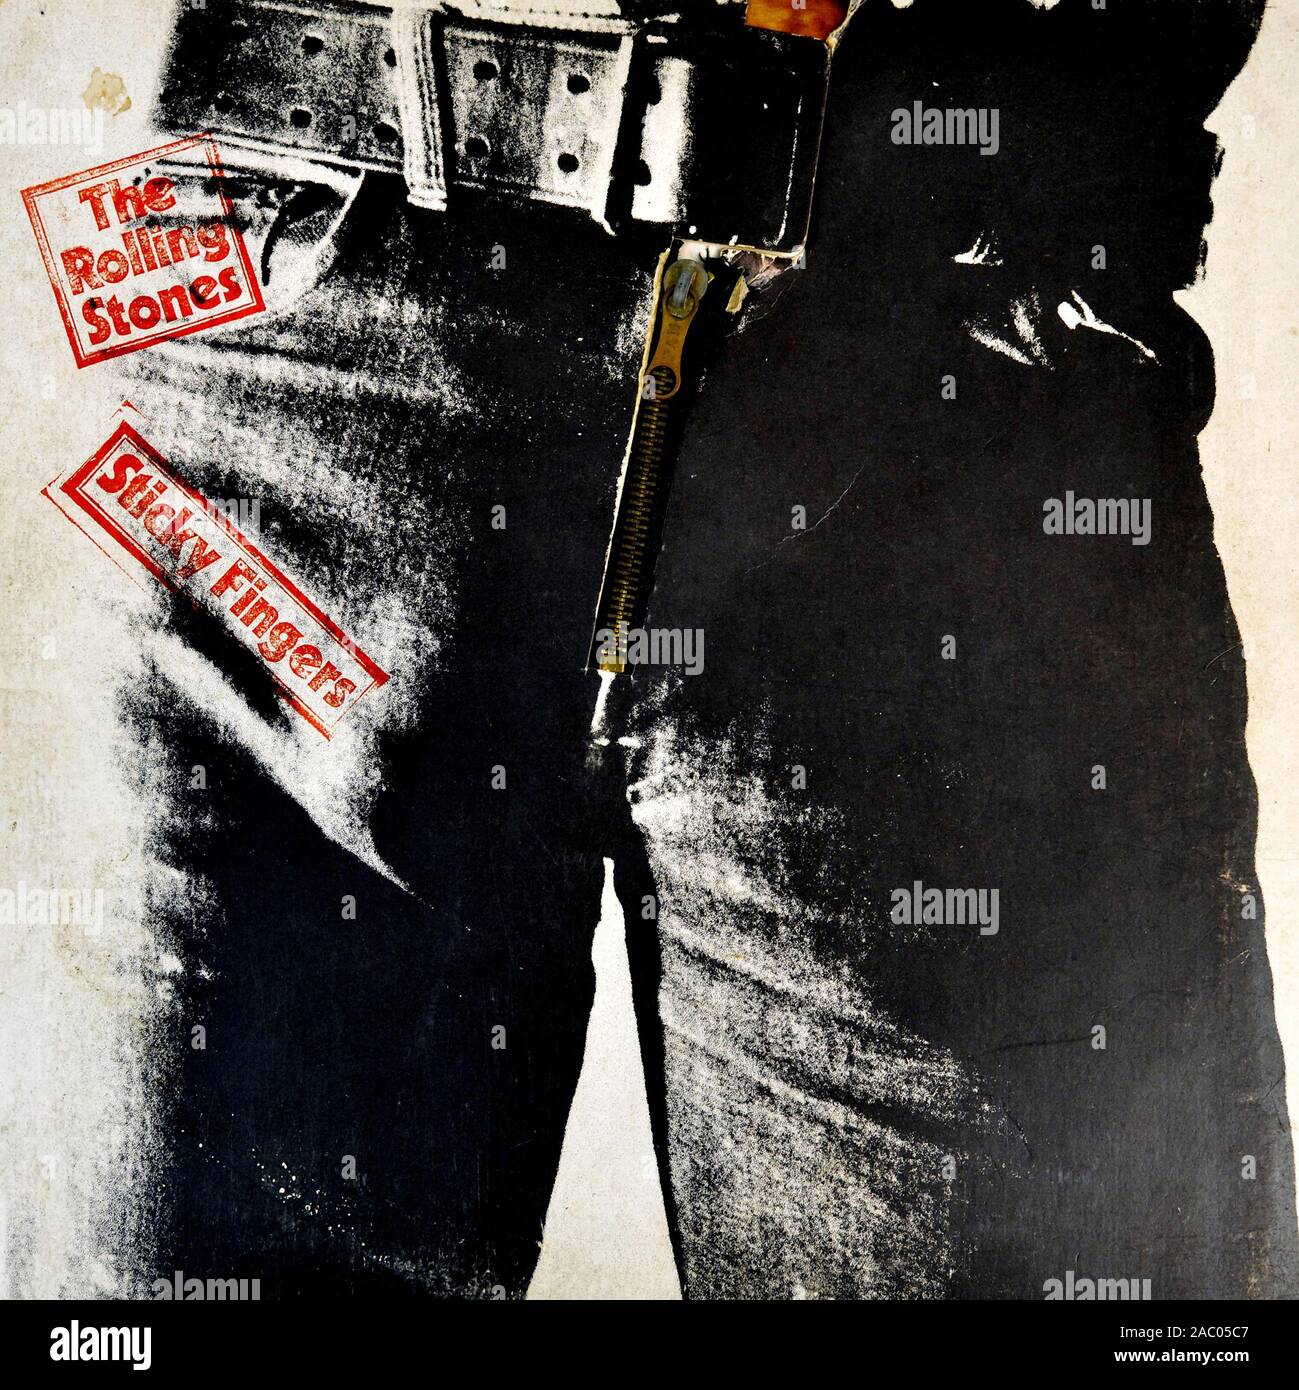 The Rolling Stones - Sticky Fingers - Vintage vinyl album cover Stock Photo  - Alamy